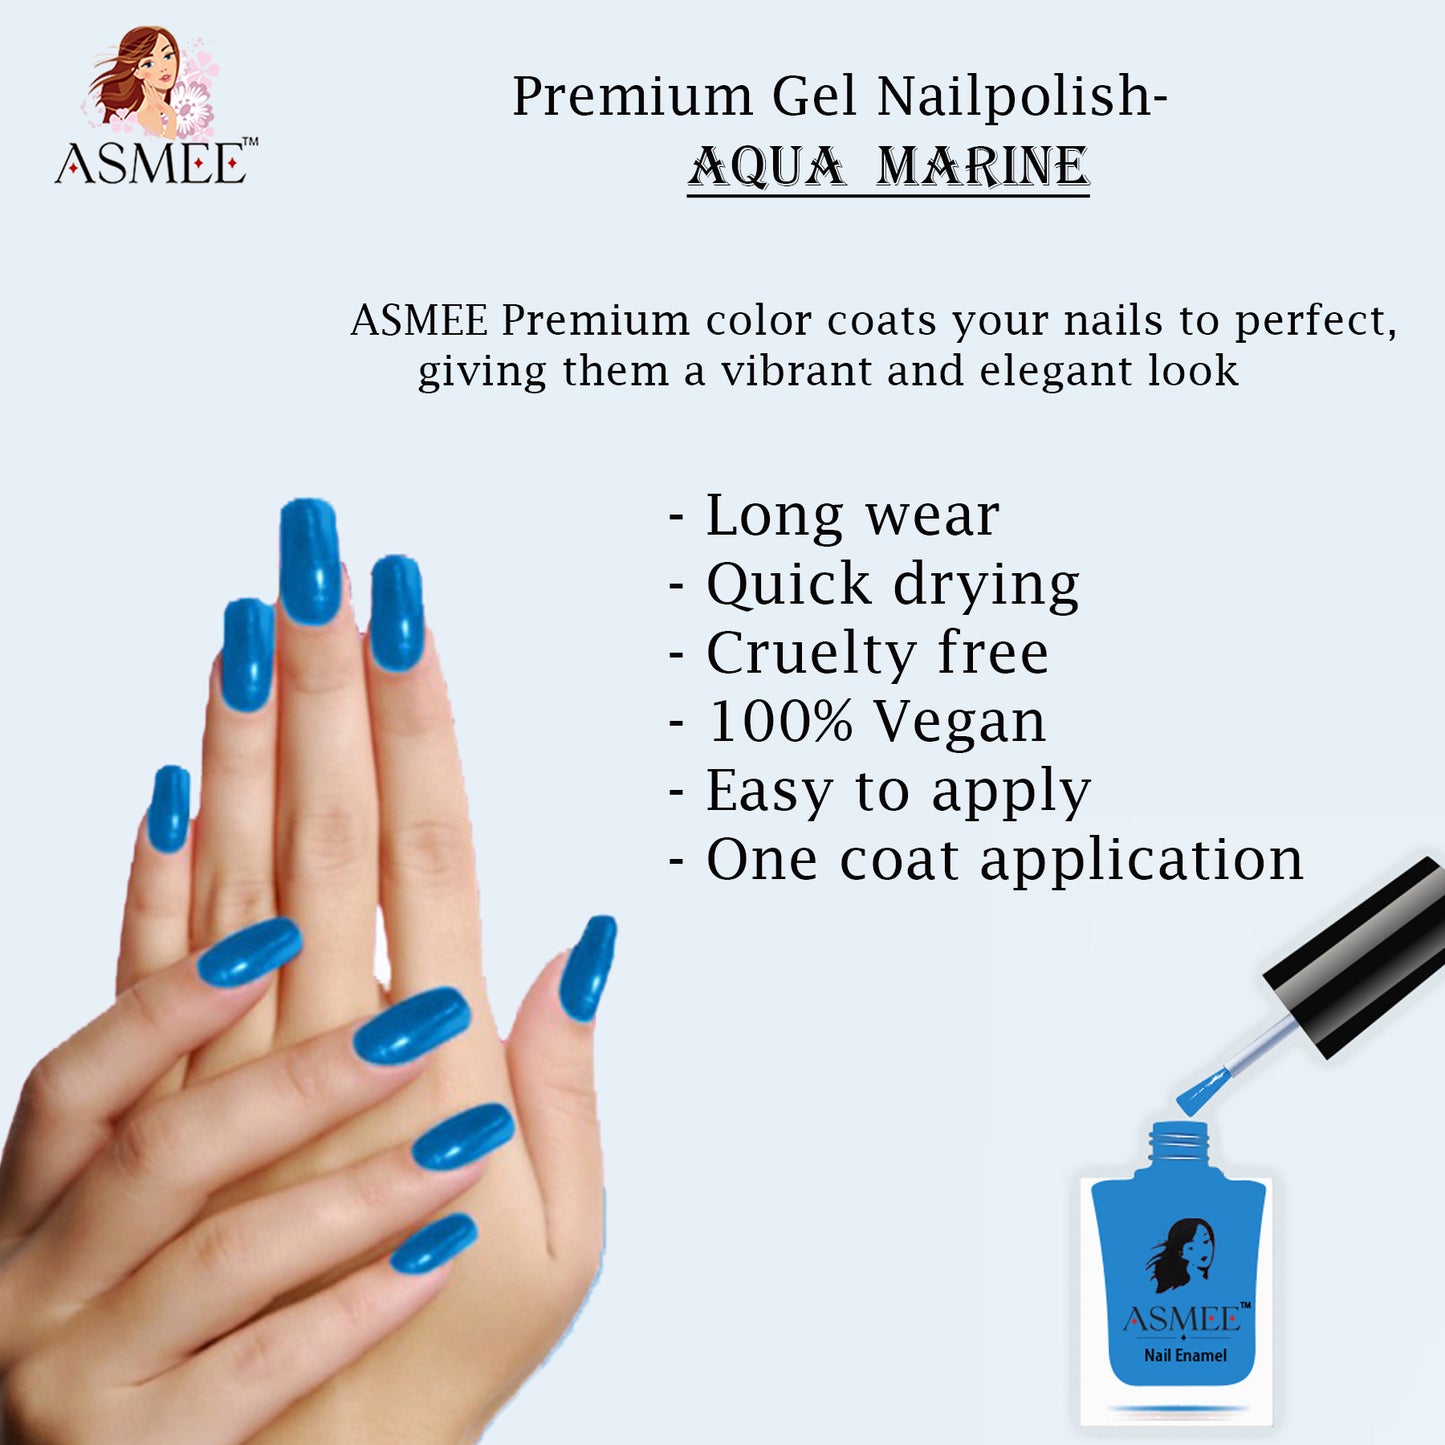 Asmee Premium Gel Nail Polish - Aqua Marin